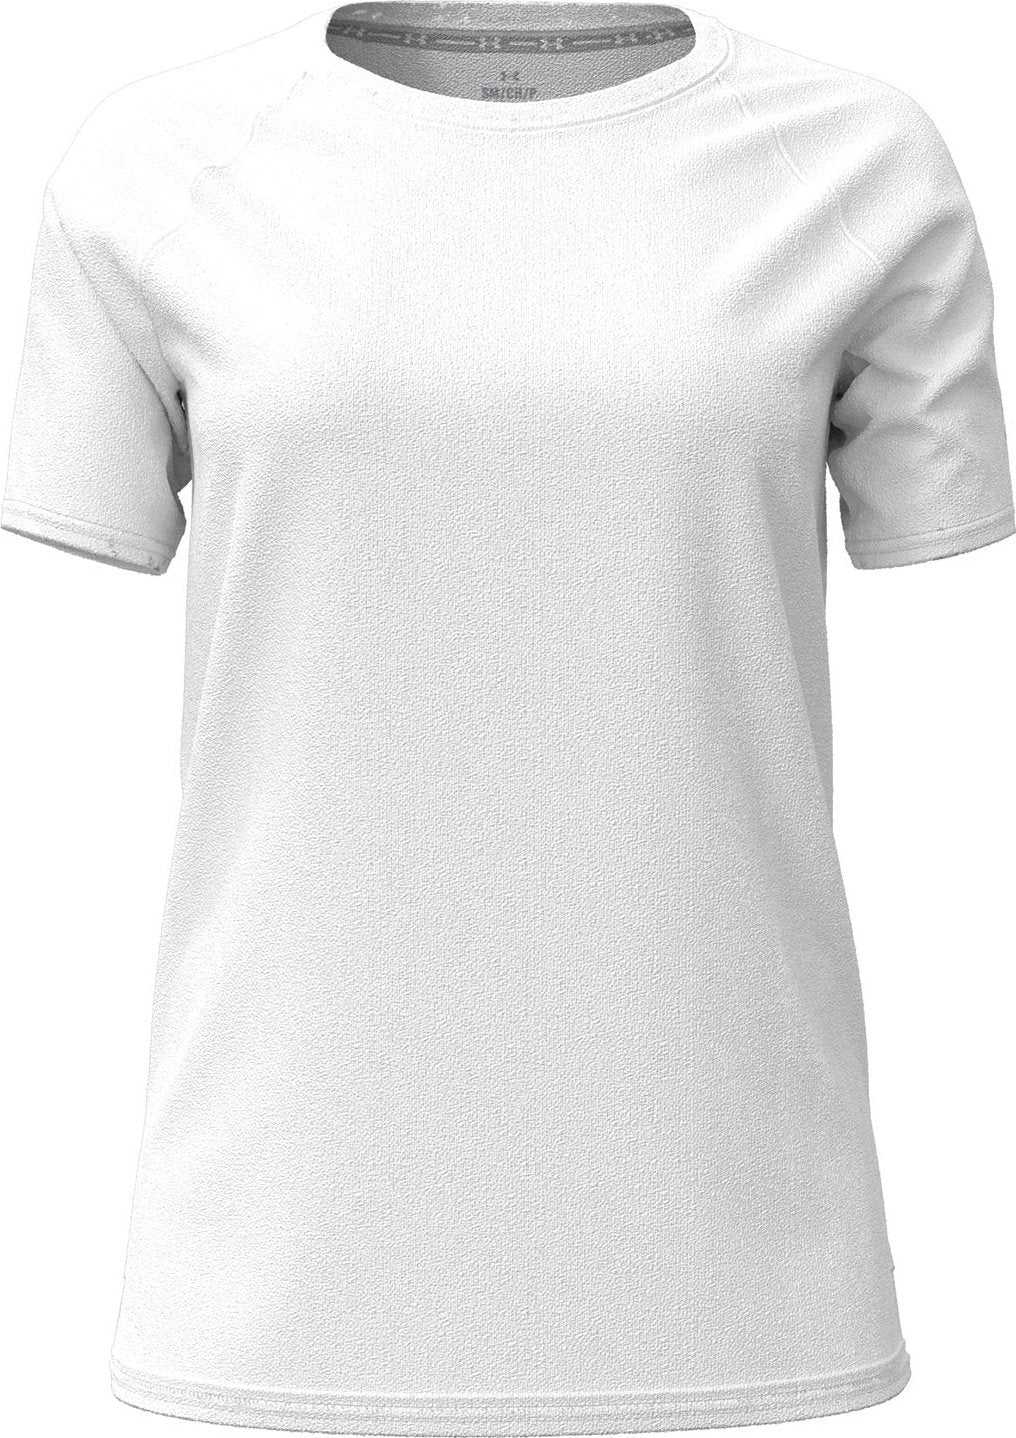 Under Armour 1376903 Ladies Athletics T-Shirt - White Steel